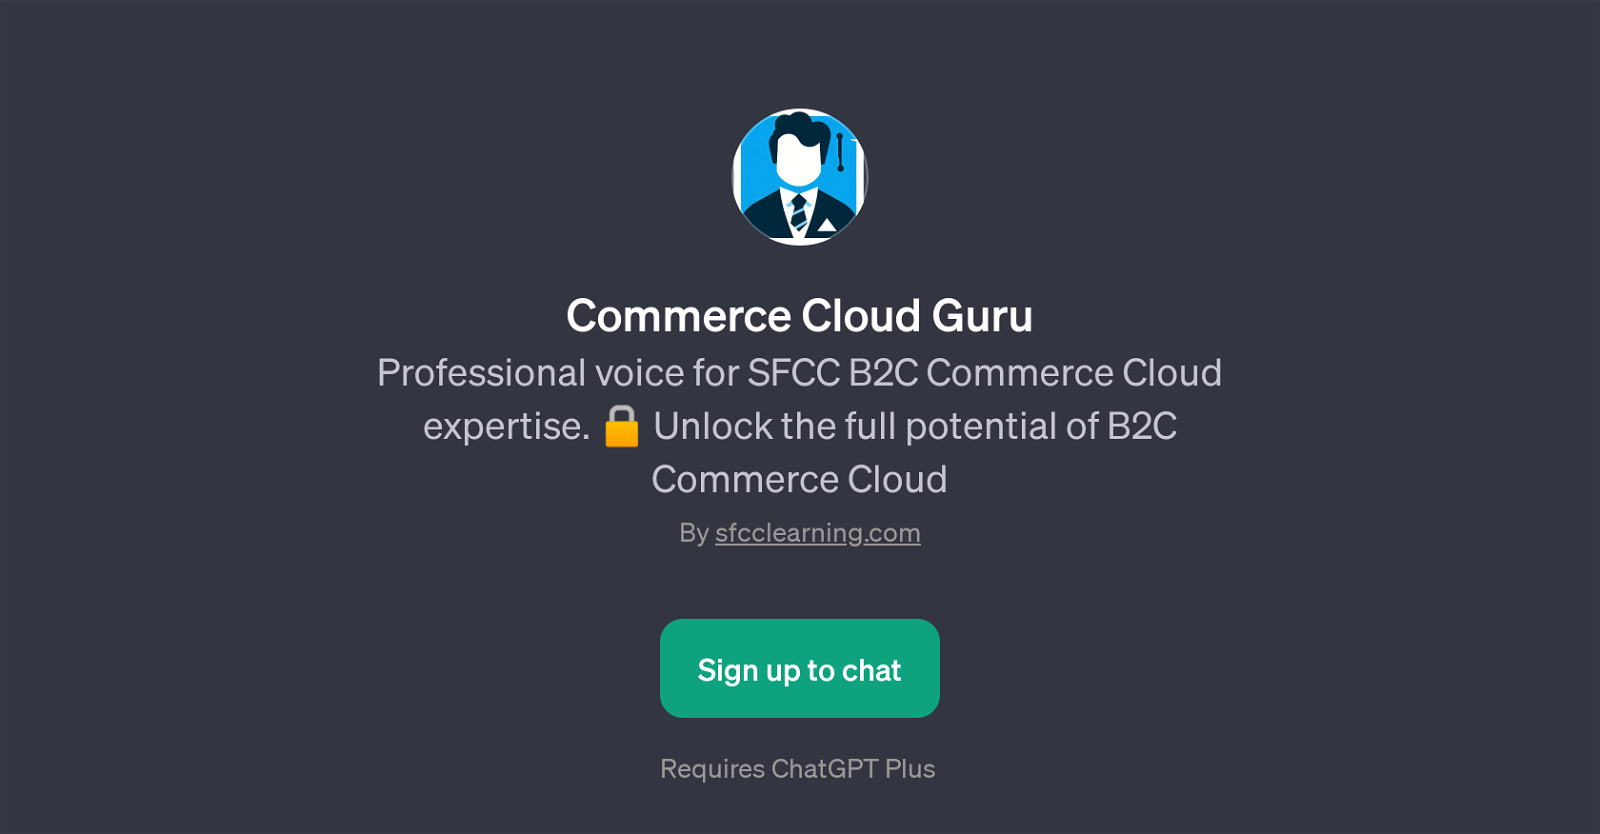 Commerce Cloud Guru website